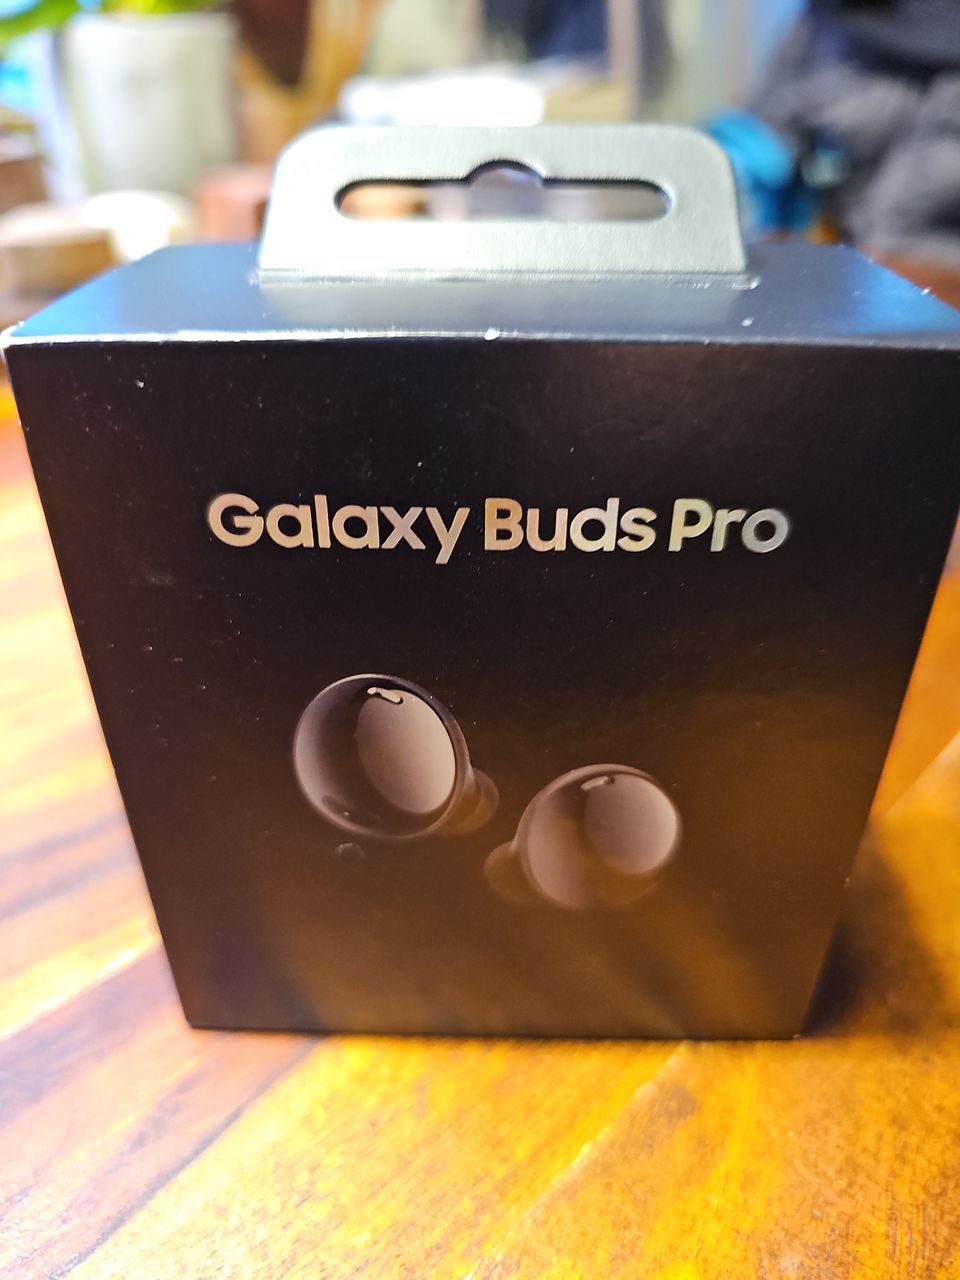 Samsung Buds Pro